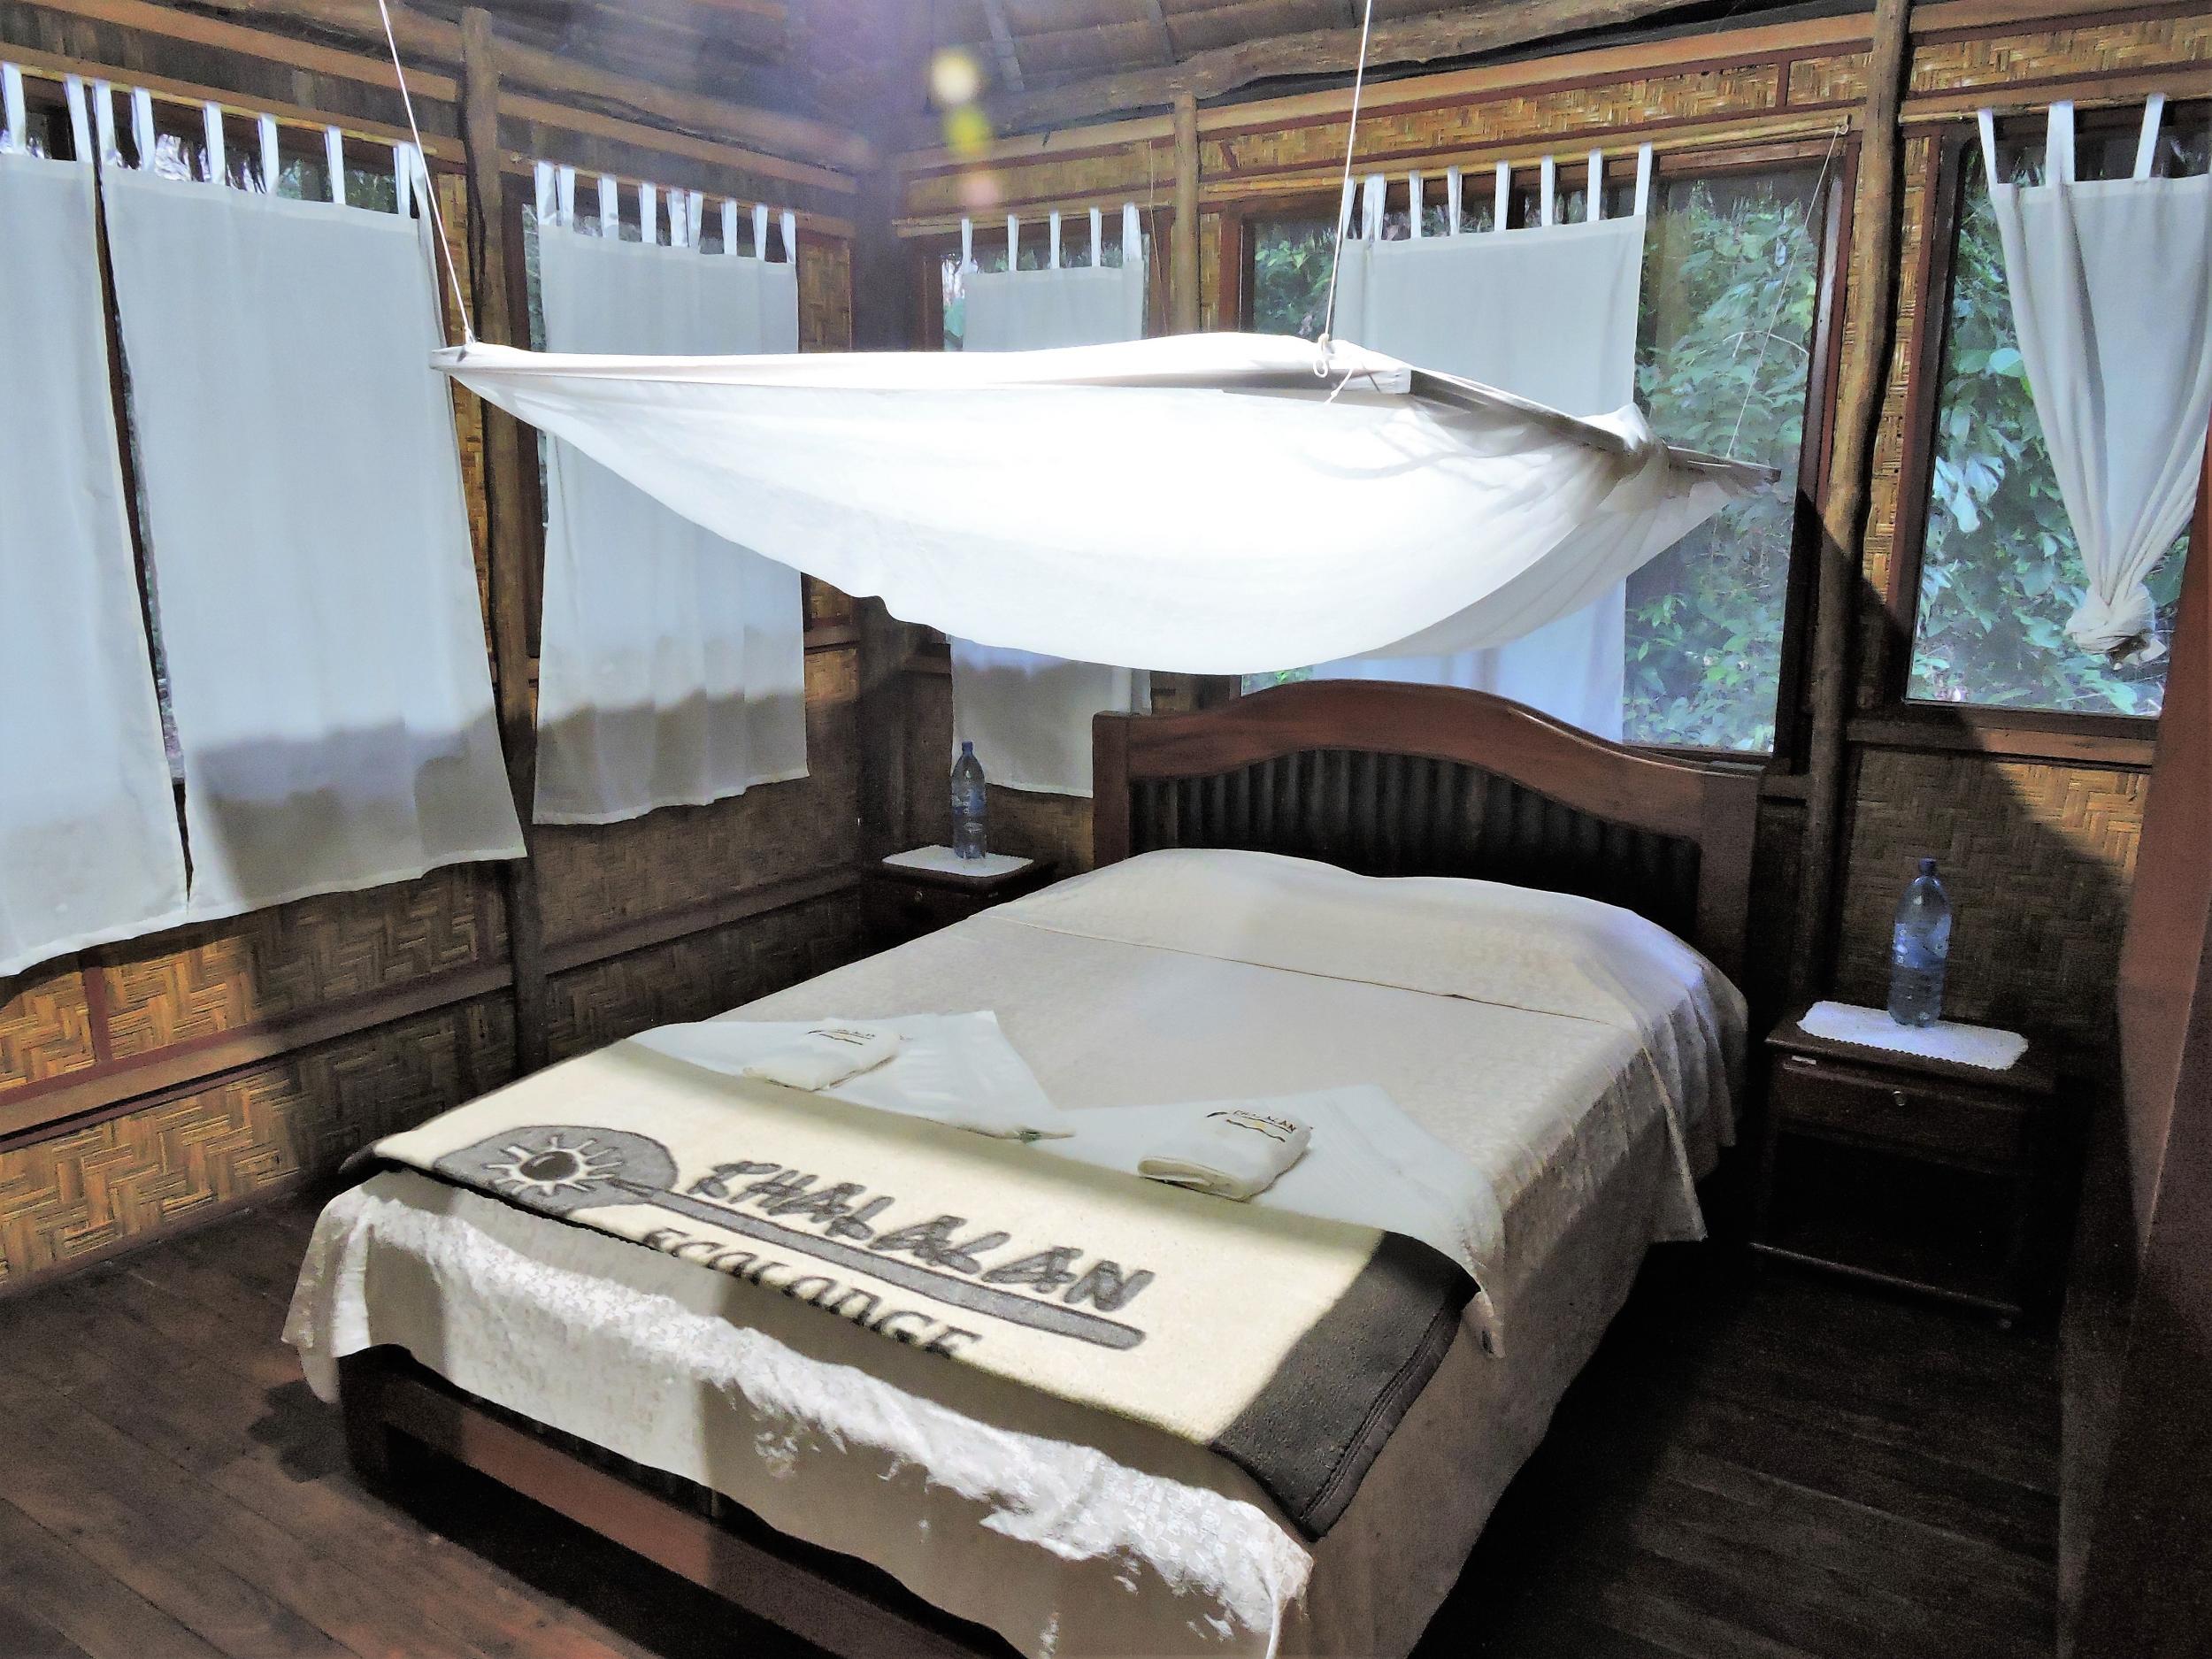 Chalalan Lodge provides a base for ecotourists